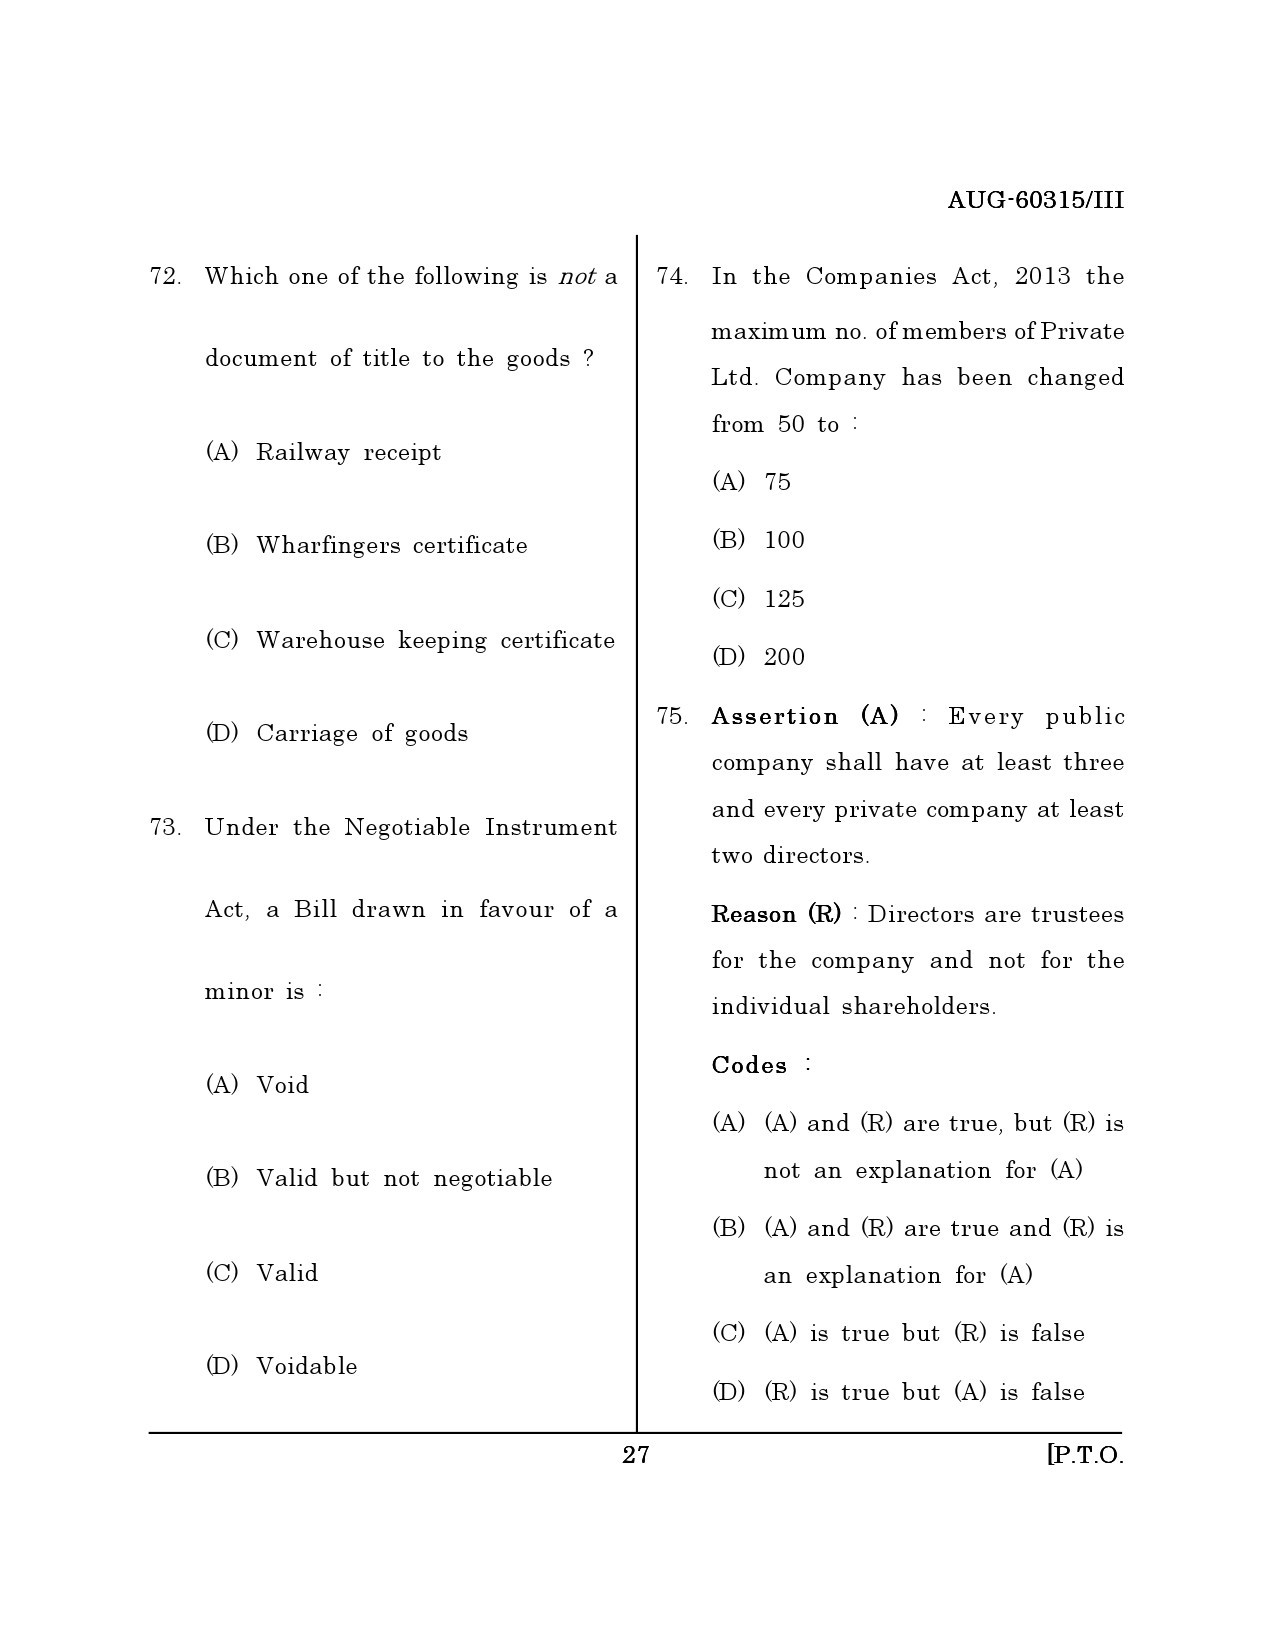 Maharashtra SET Law Question Paper III August 2015 26